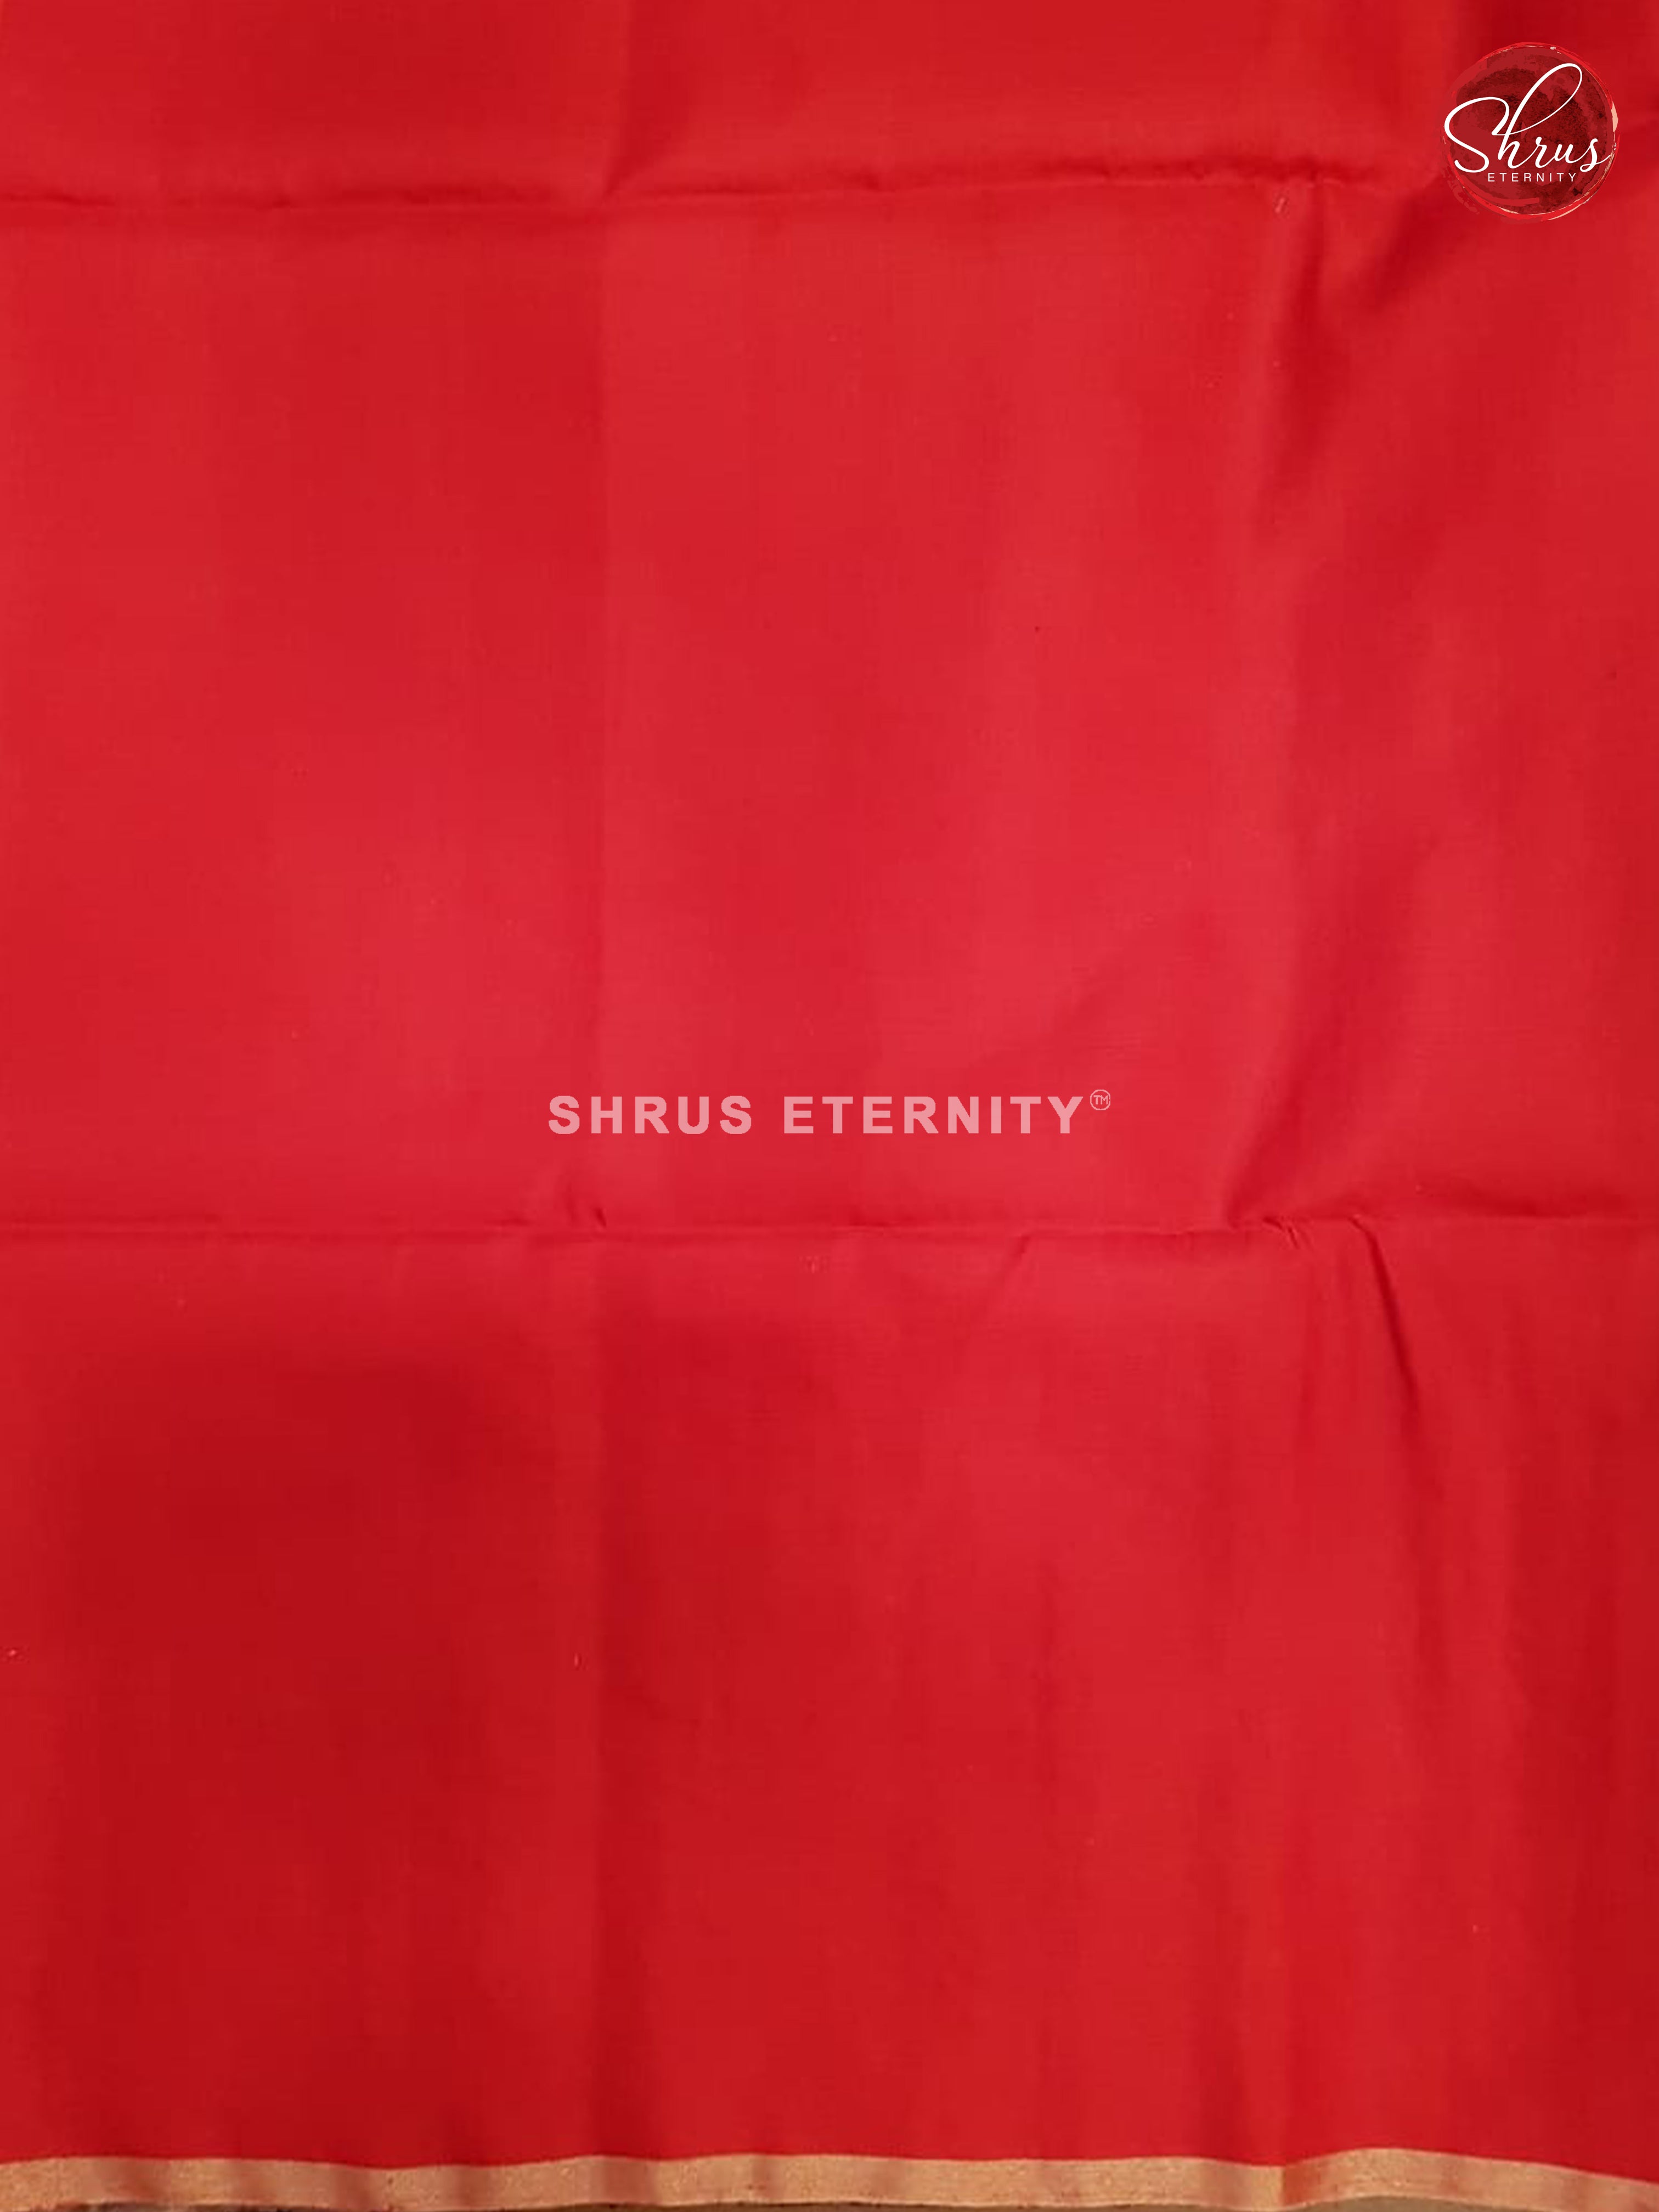 Majenta & Red - Soft Silk - Shop on ShrusEternity.com